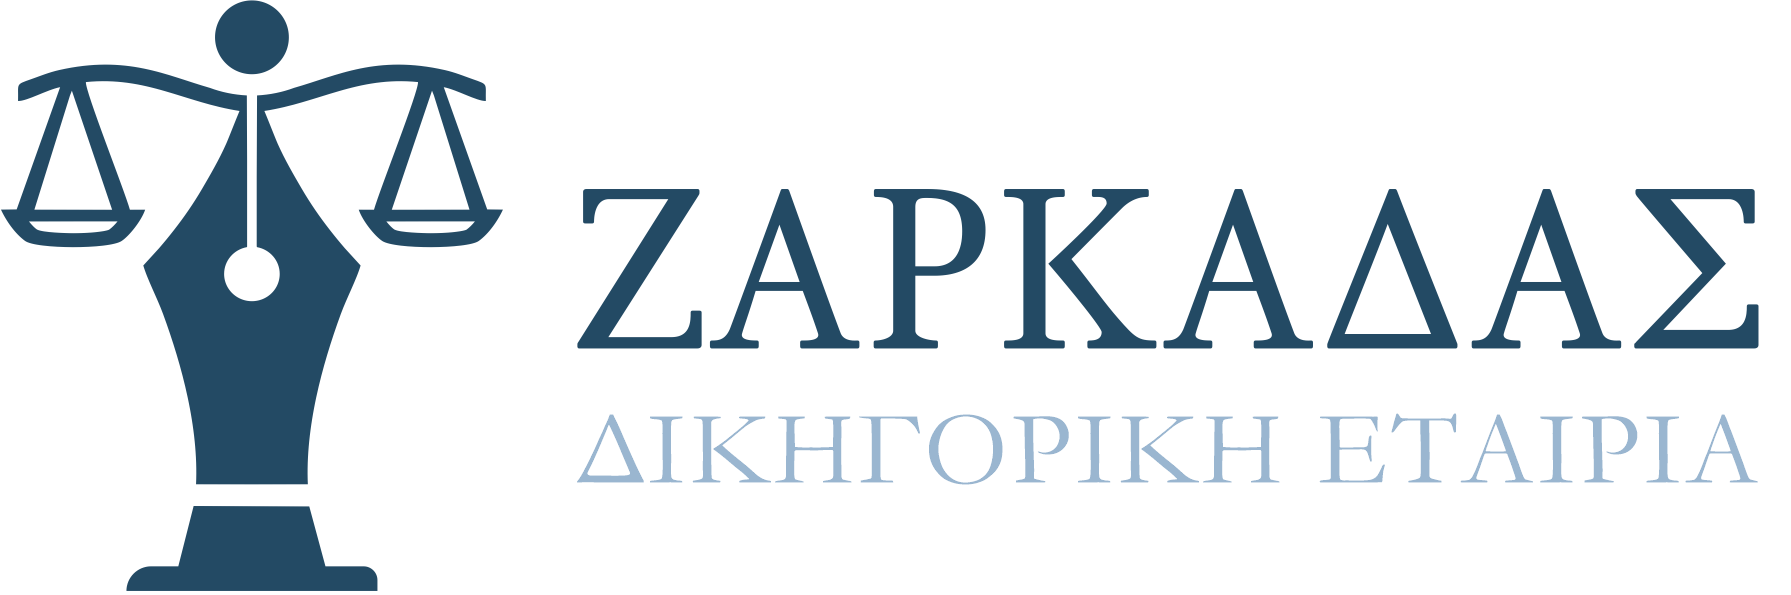 Zarkadas law logo